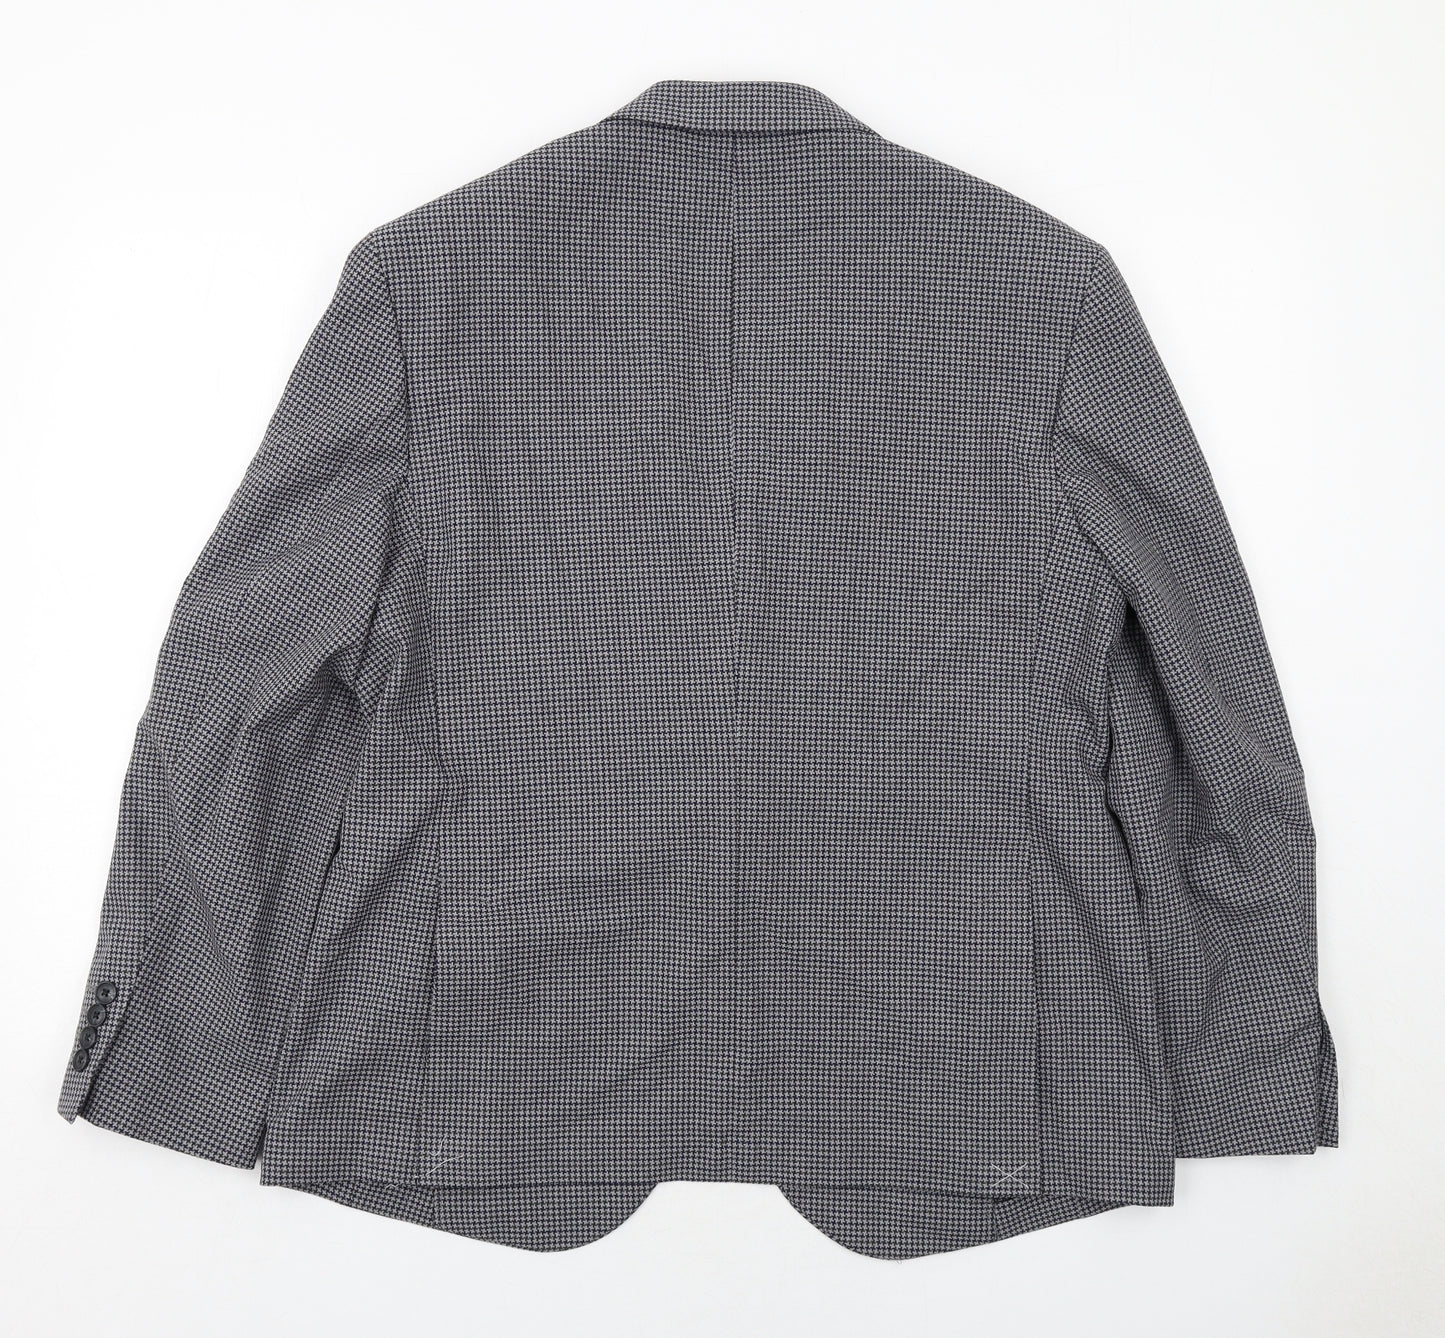 Marks and Spencer Mens Grey Geometric Polyester Jacket Suit Jacket Size 42 Regular